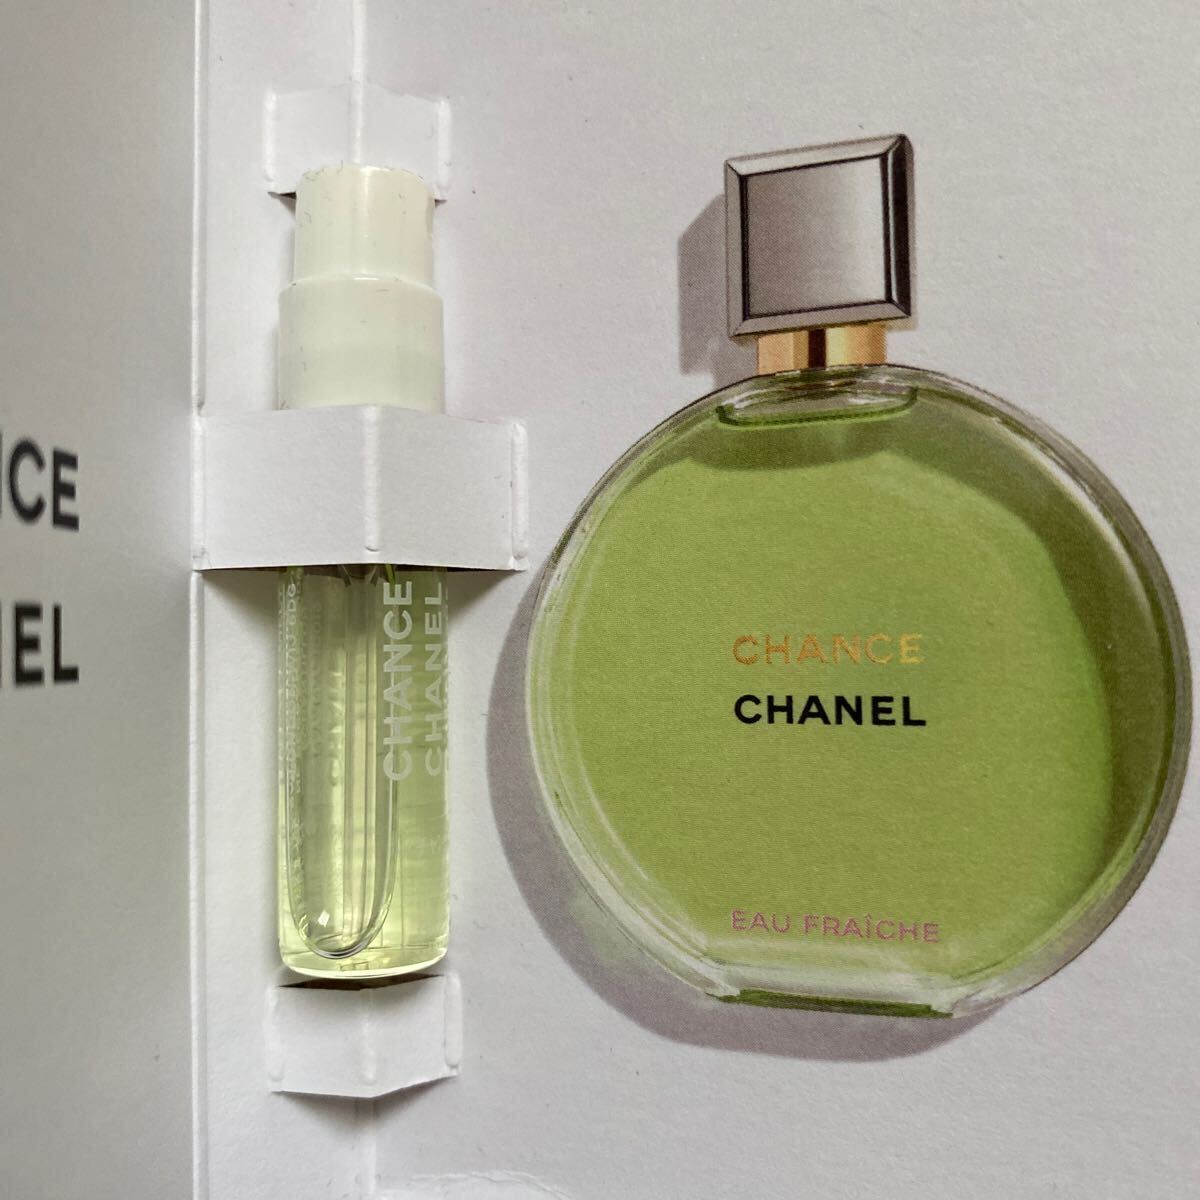 CHANEL シャネル CHANCE チャンス オー フレッシュ オードゥ パルファム 香水 サンプル 新品未使用 送料無料